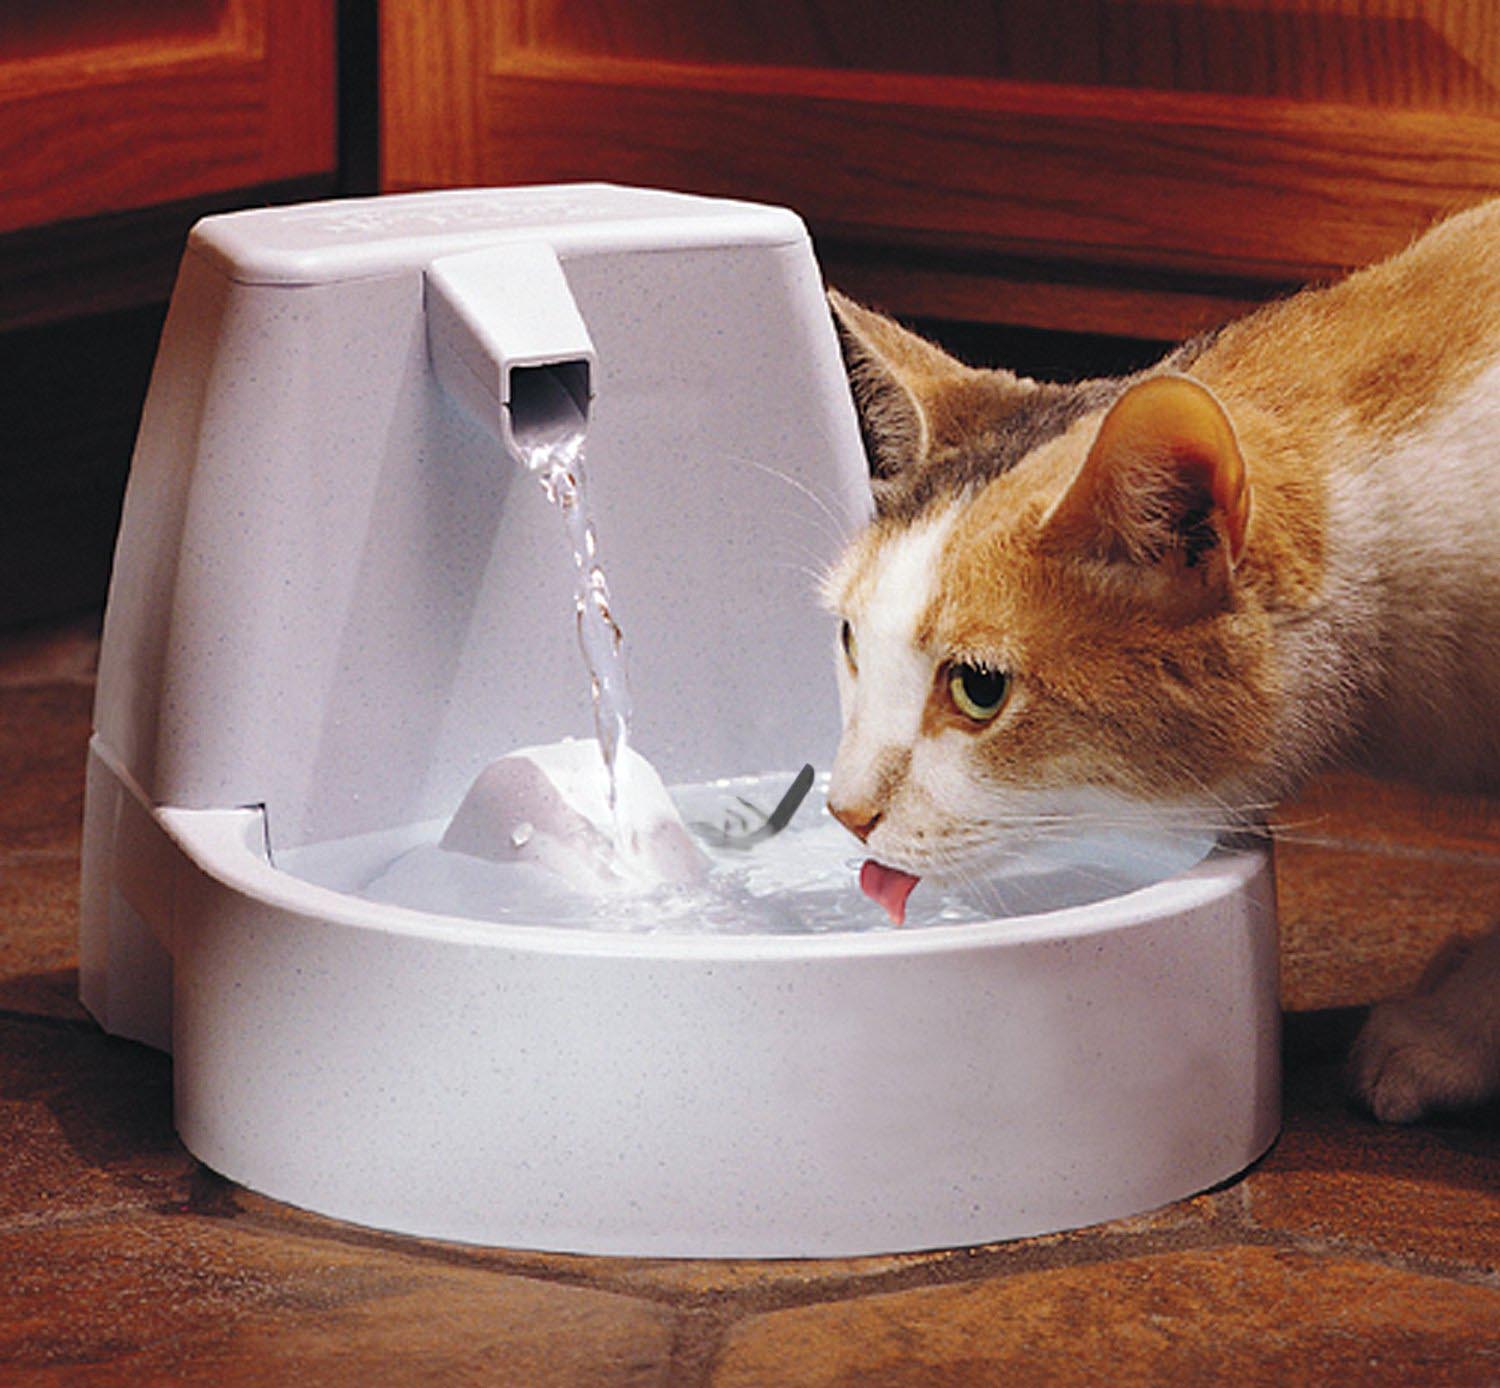 The Bubbler Cat Water Fountain